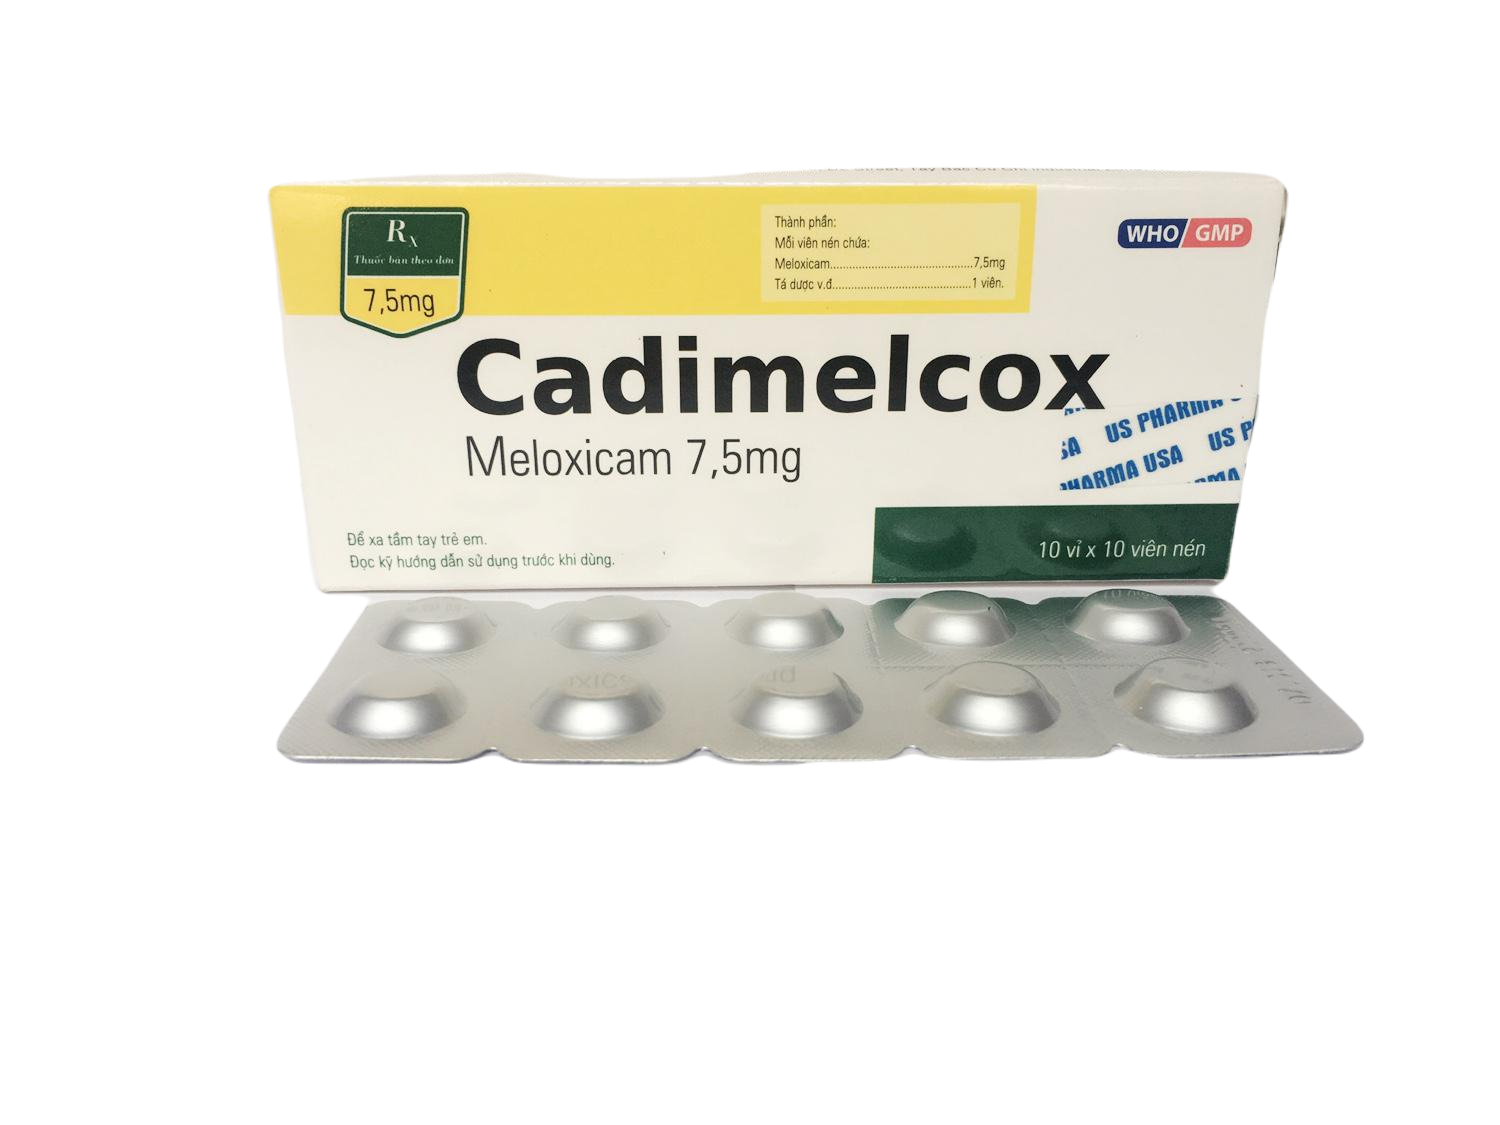 Cadimelcox (Meloxicam) 7.5mg US Pharma (H/100v)